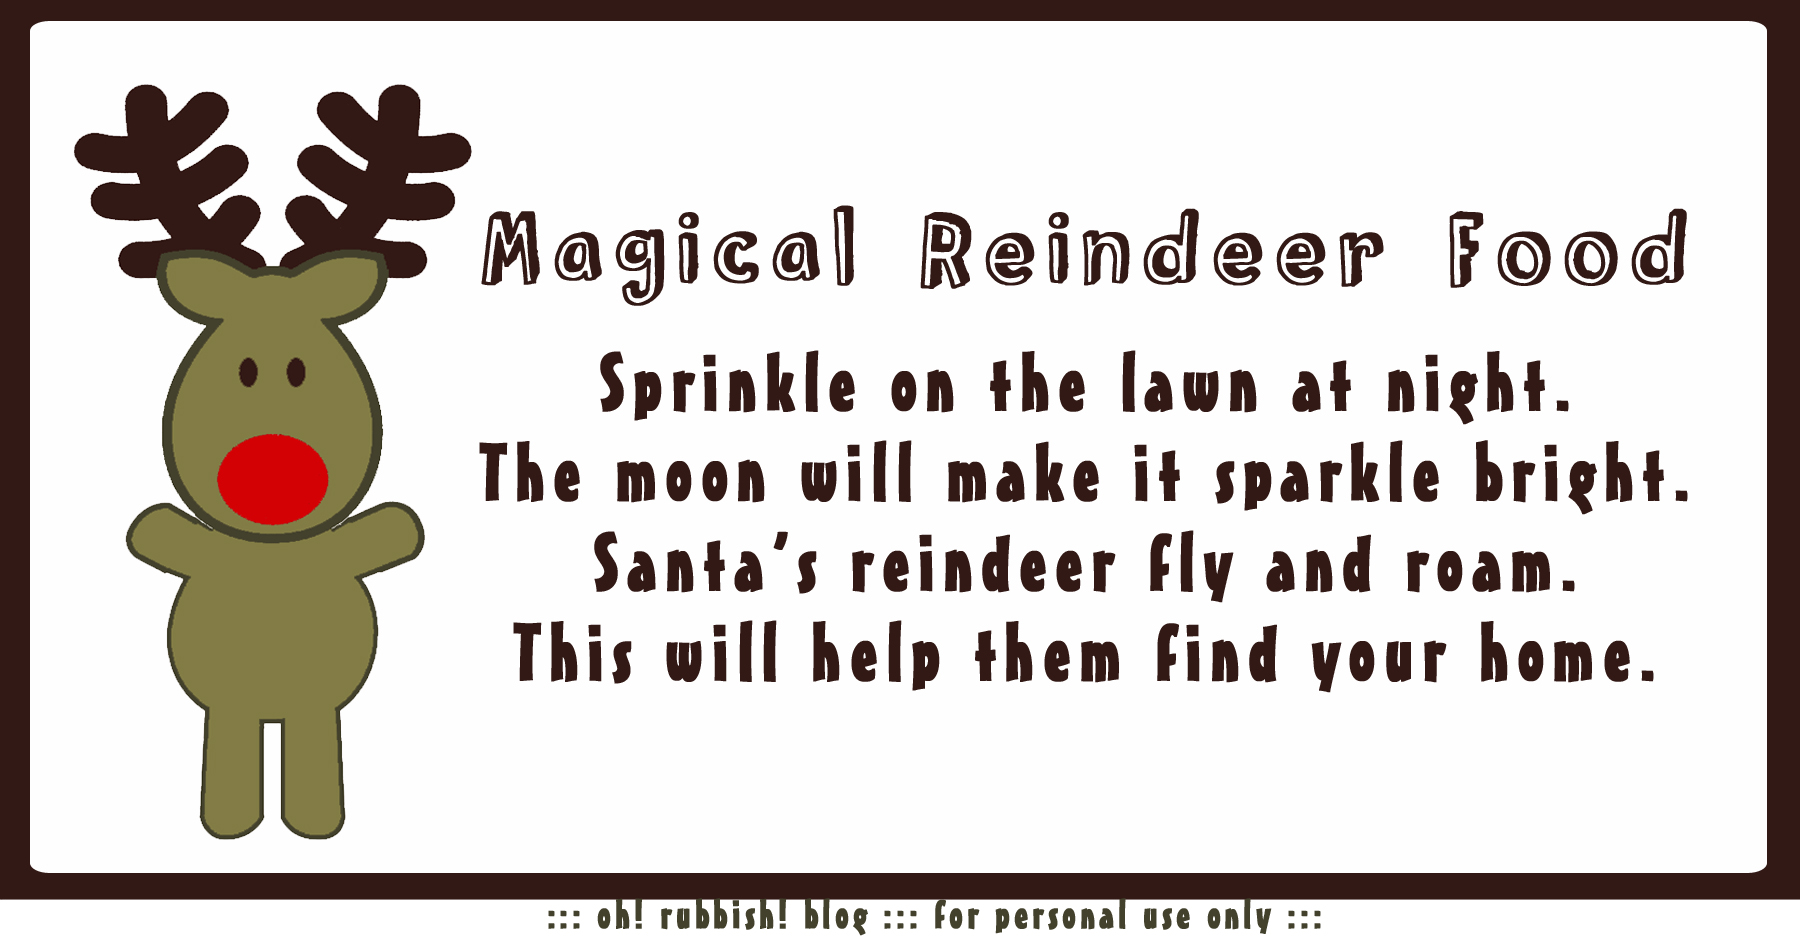 http://ohrubbishblog.com/wp-content/uploads/2014/12/Magical-Reindeer-Food-horizontal-printable.jpg